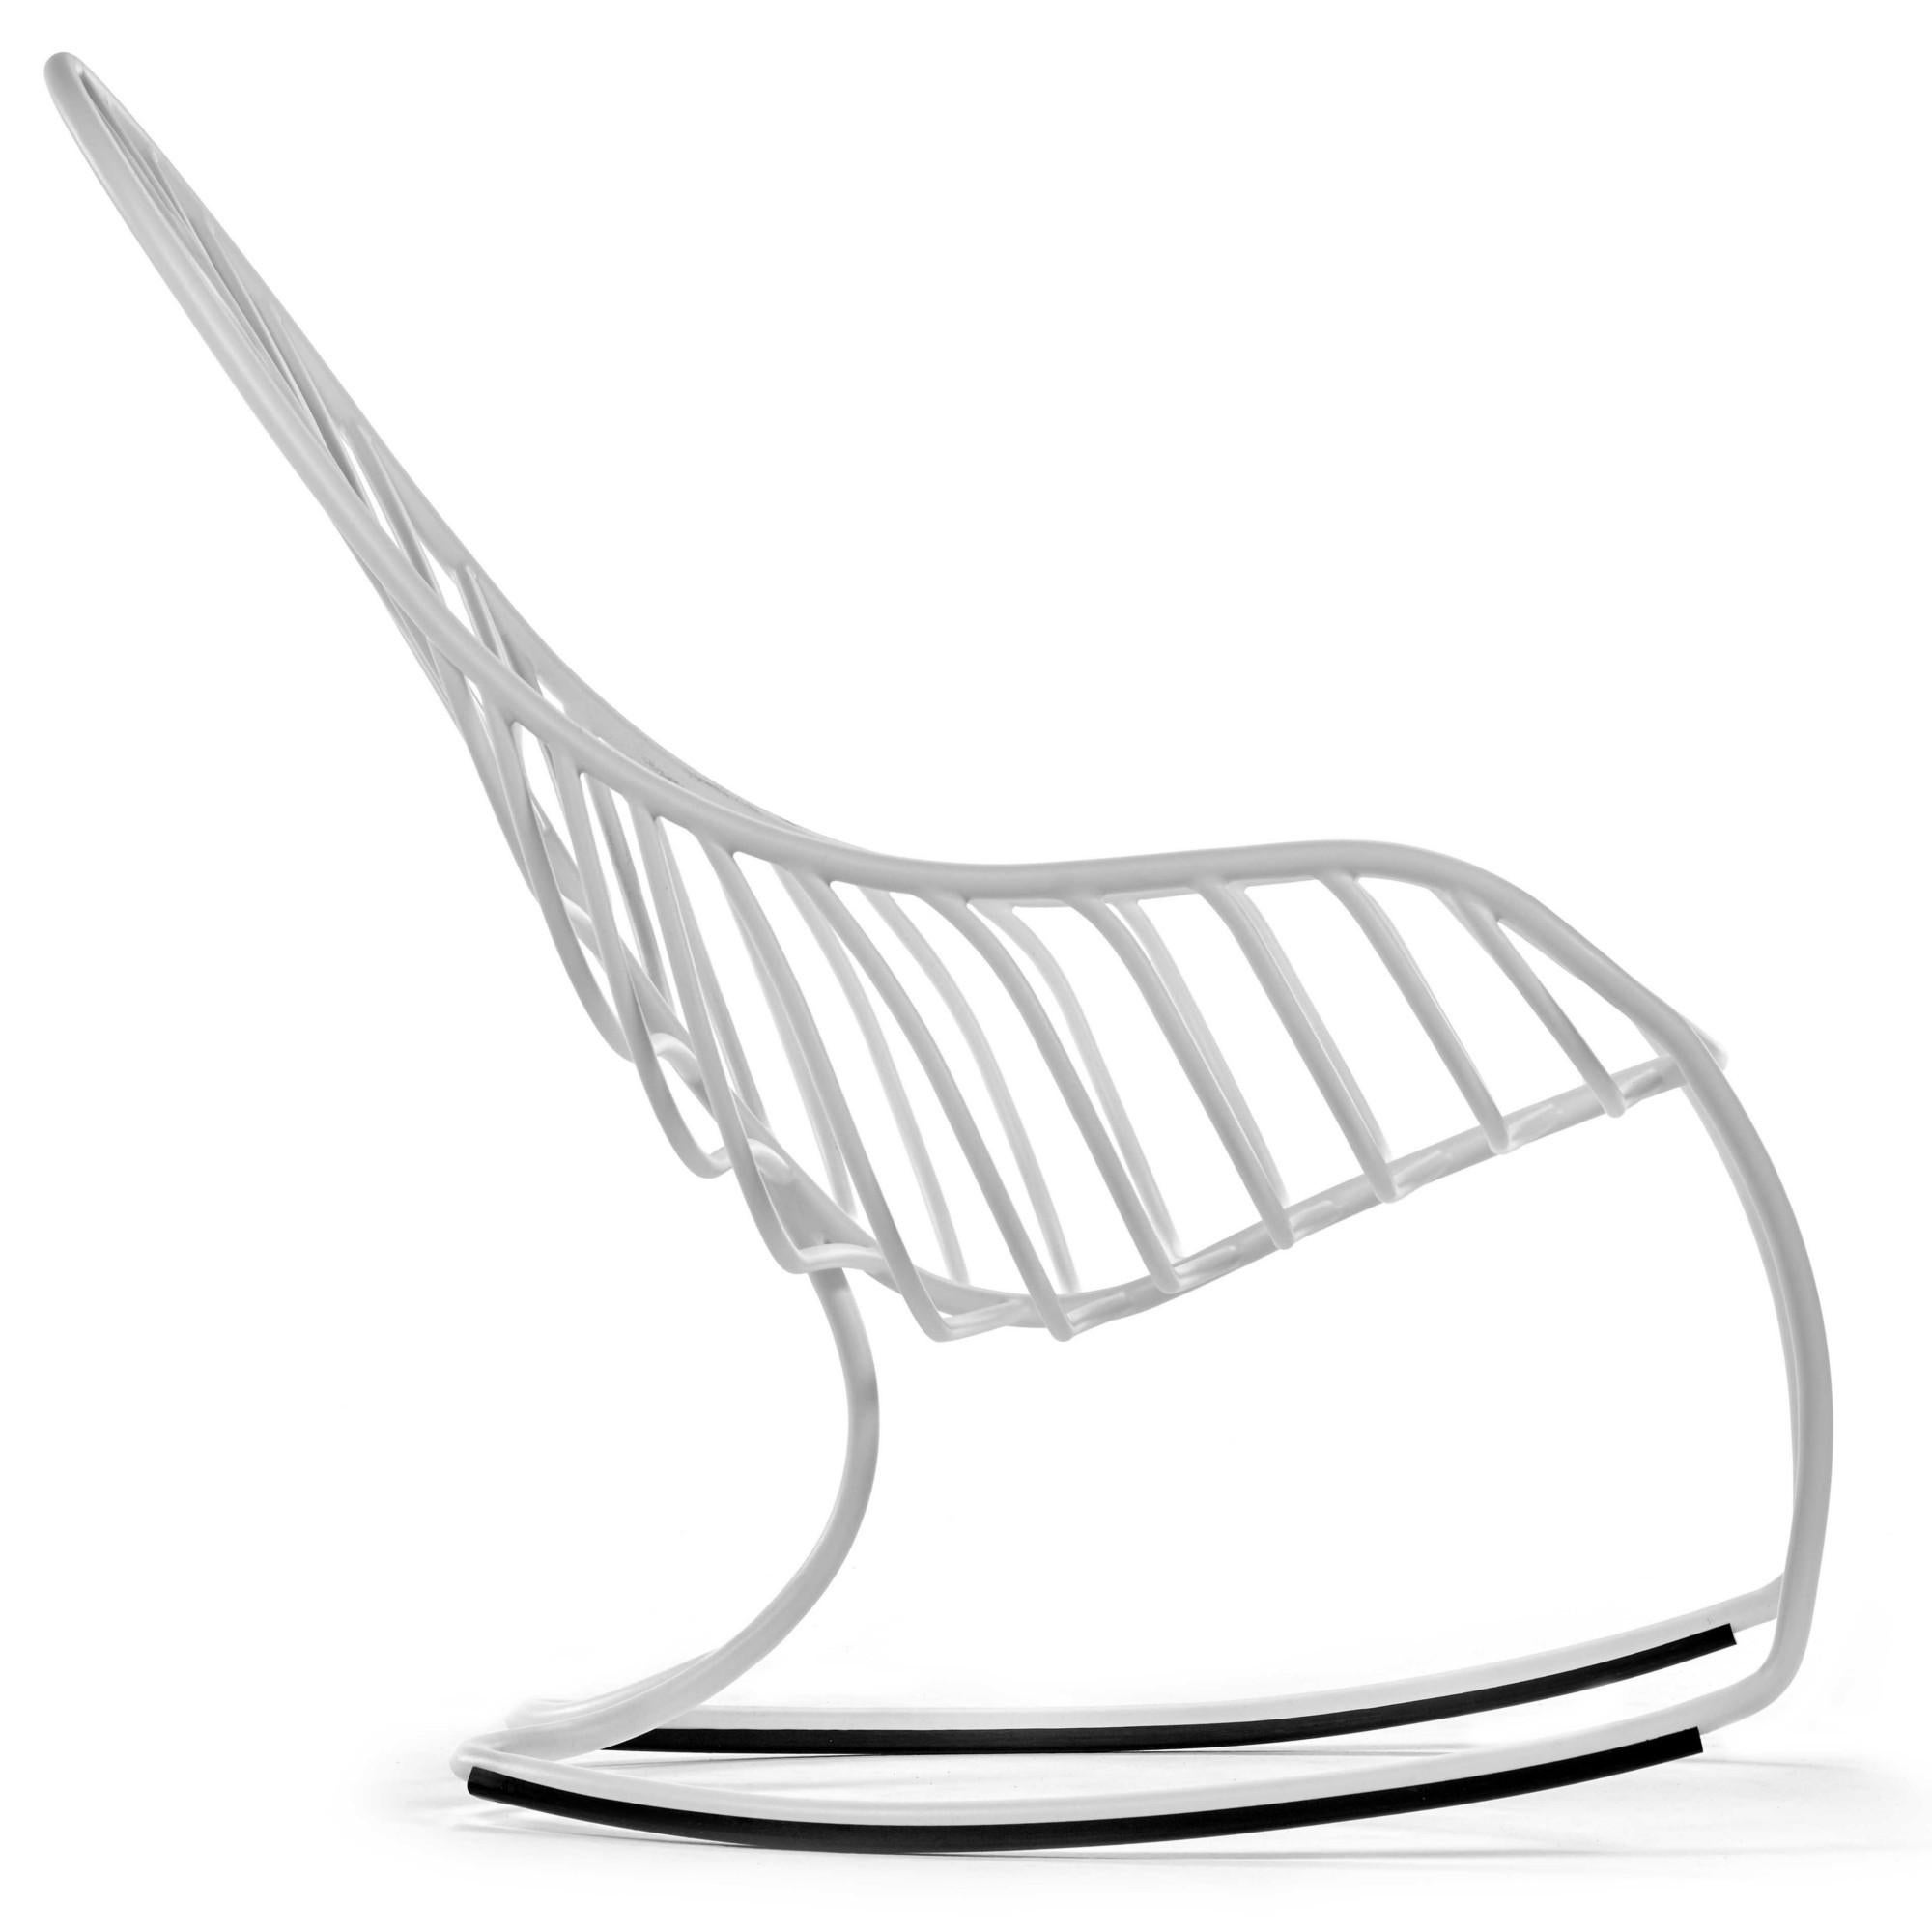 modern outdoor rocking chair